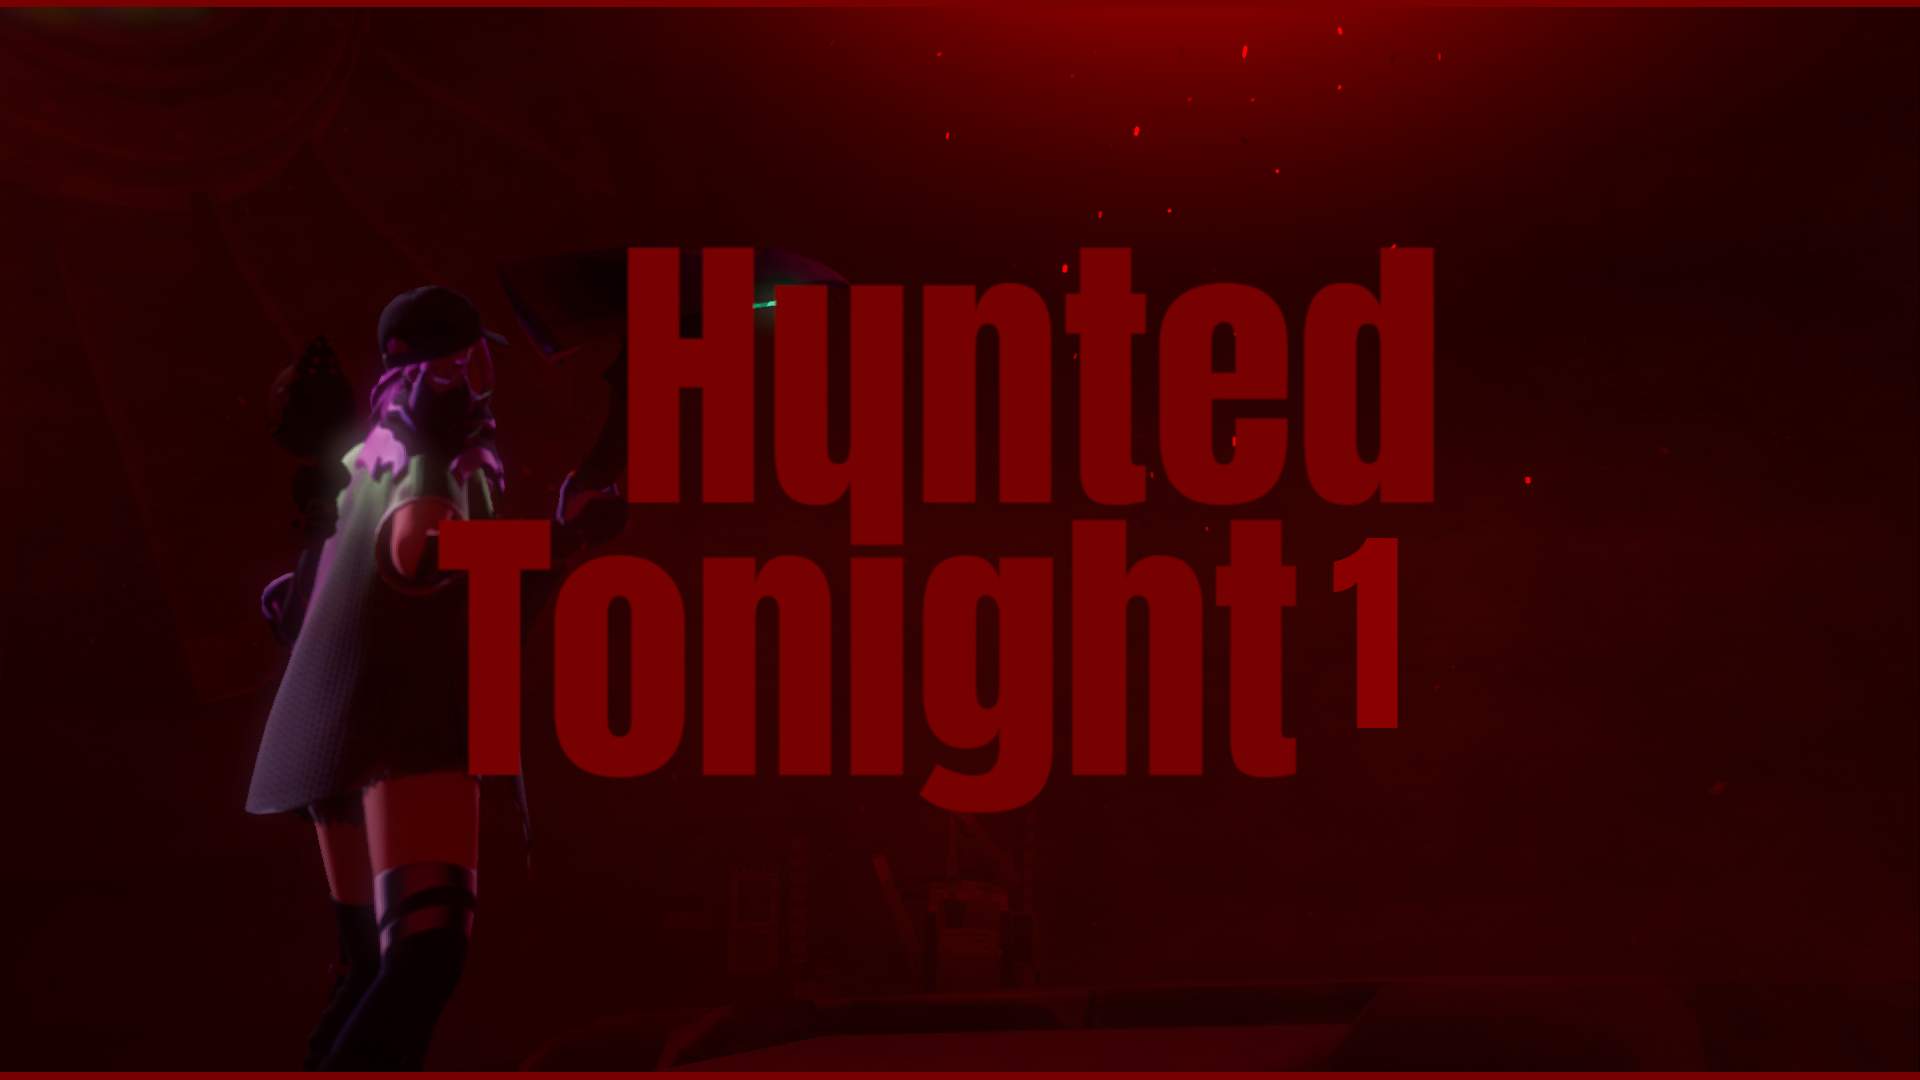 Hunted Tonight 1 8751-1842-8237